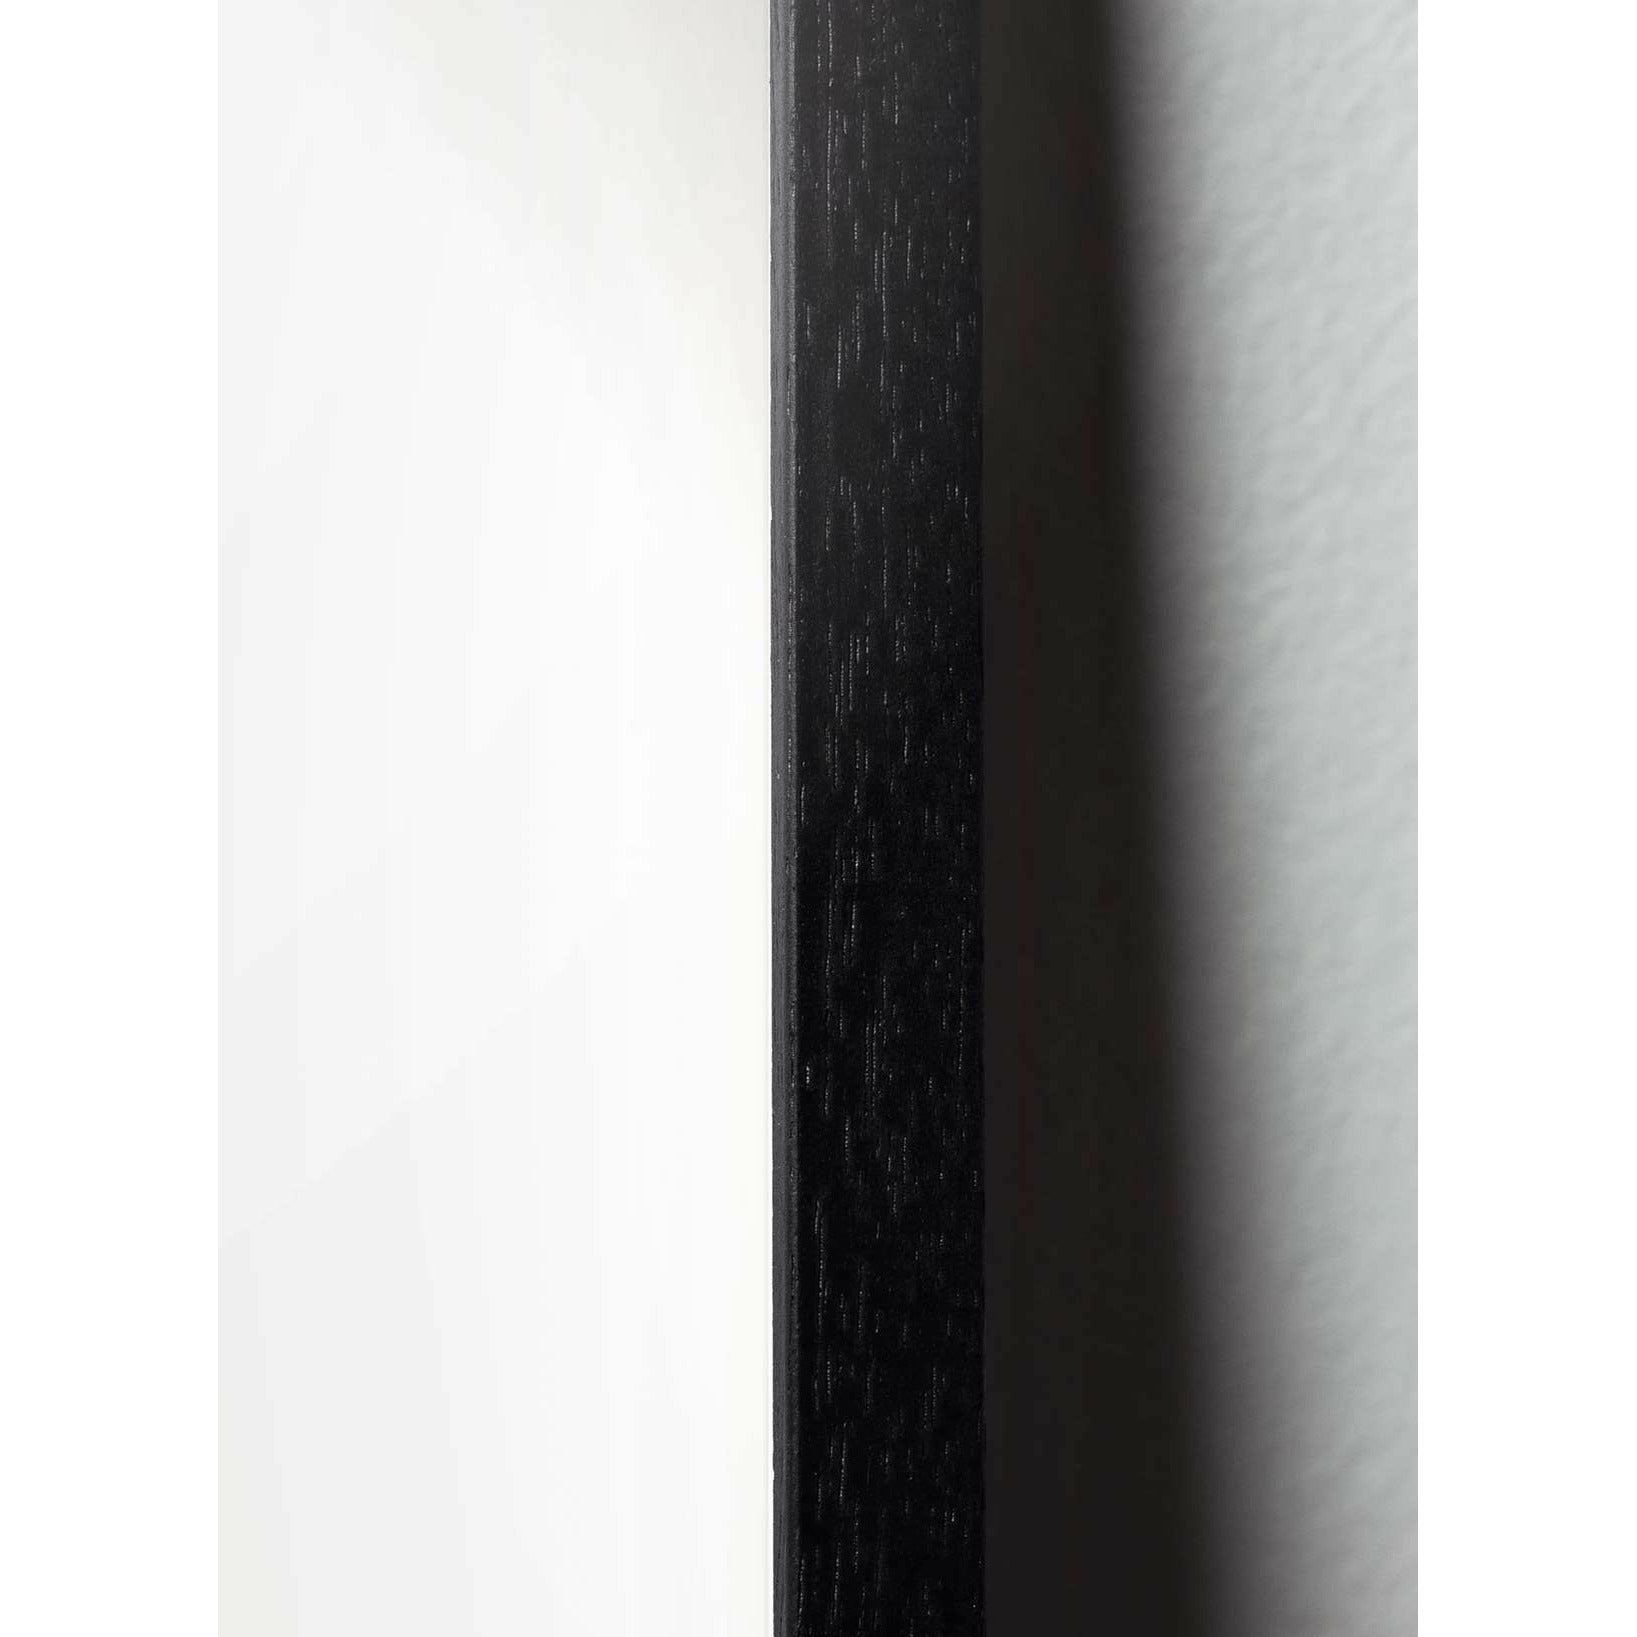 Brainchild Design Icon Poster, Rahmen aus schwarz lackiertem Holz A5, Farbe